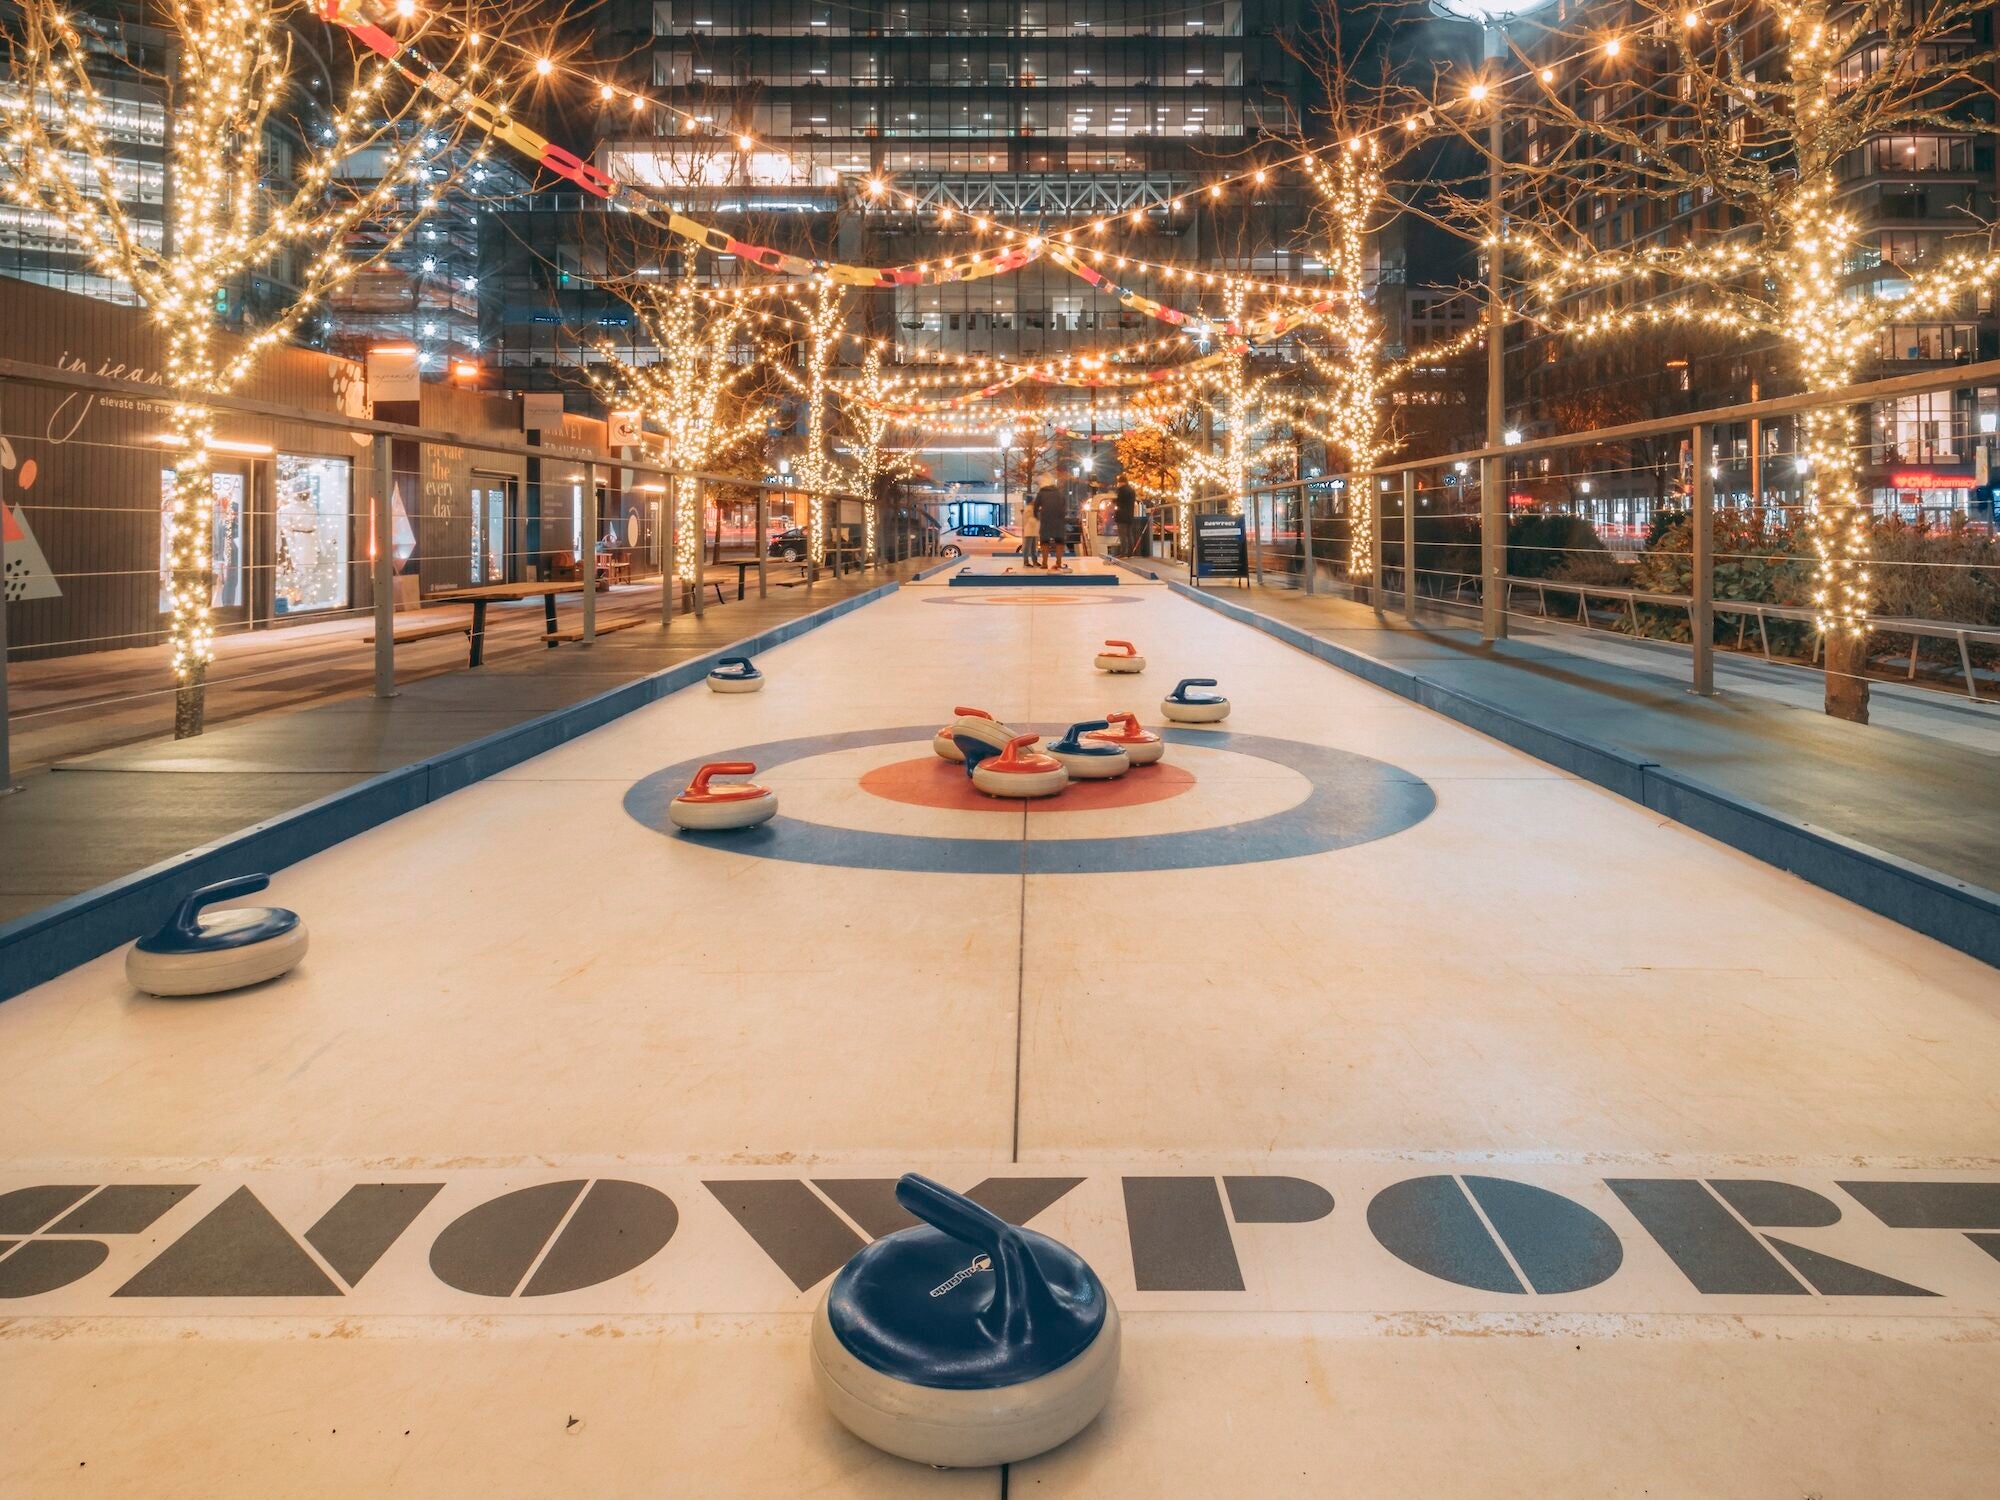 Snowport's iceless curling rink in Boston's Seaport neighborhood.